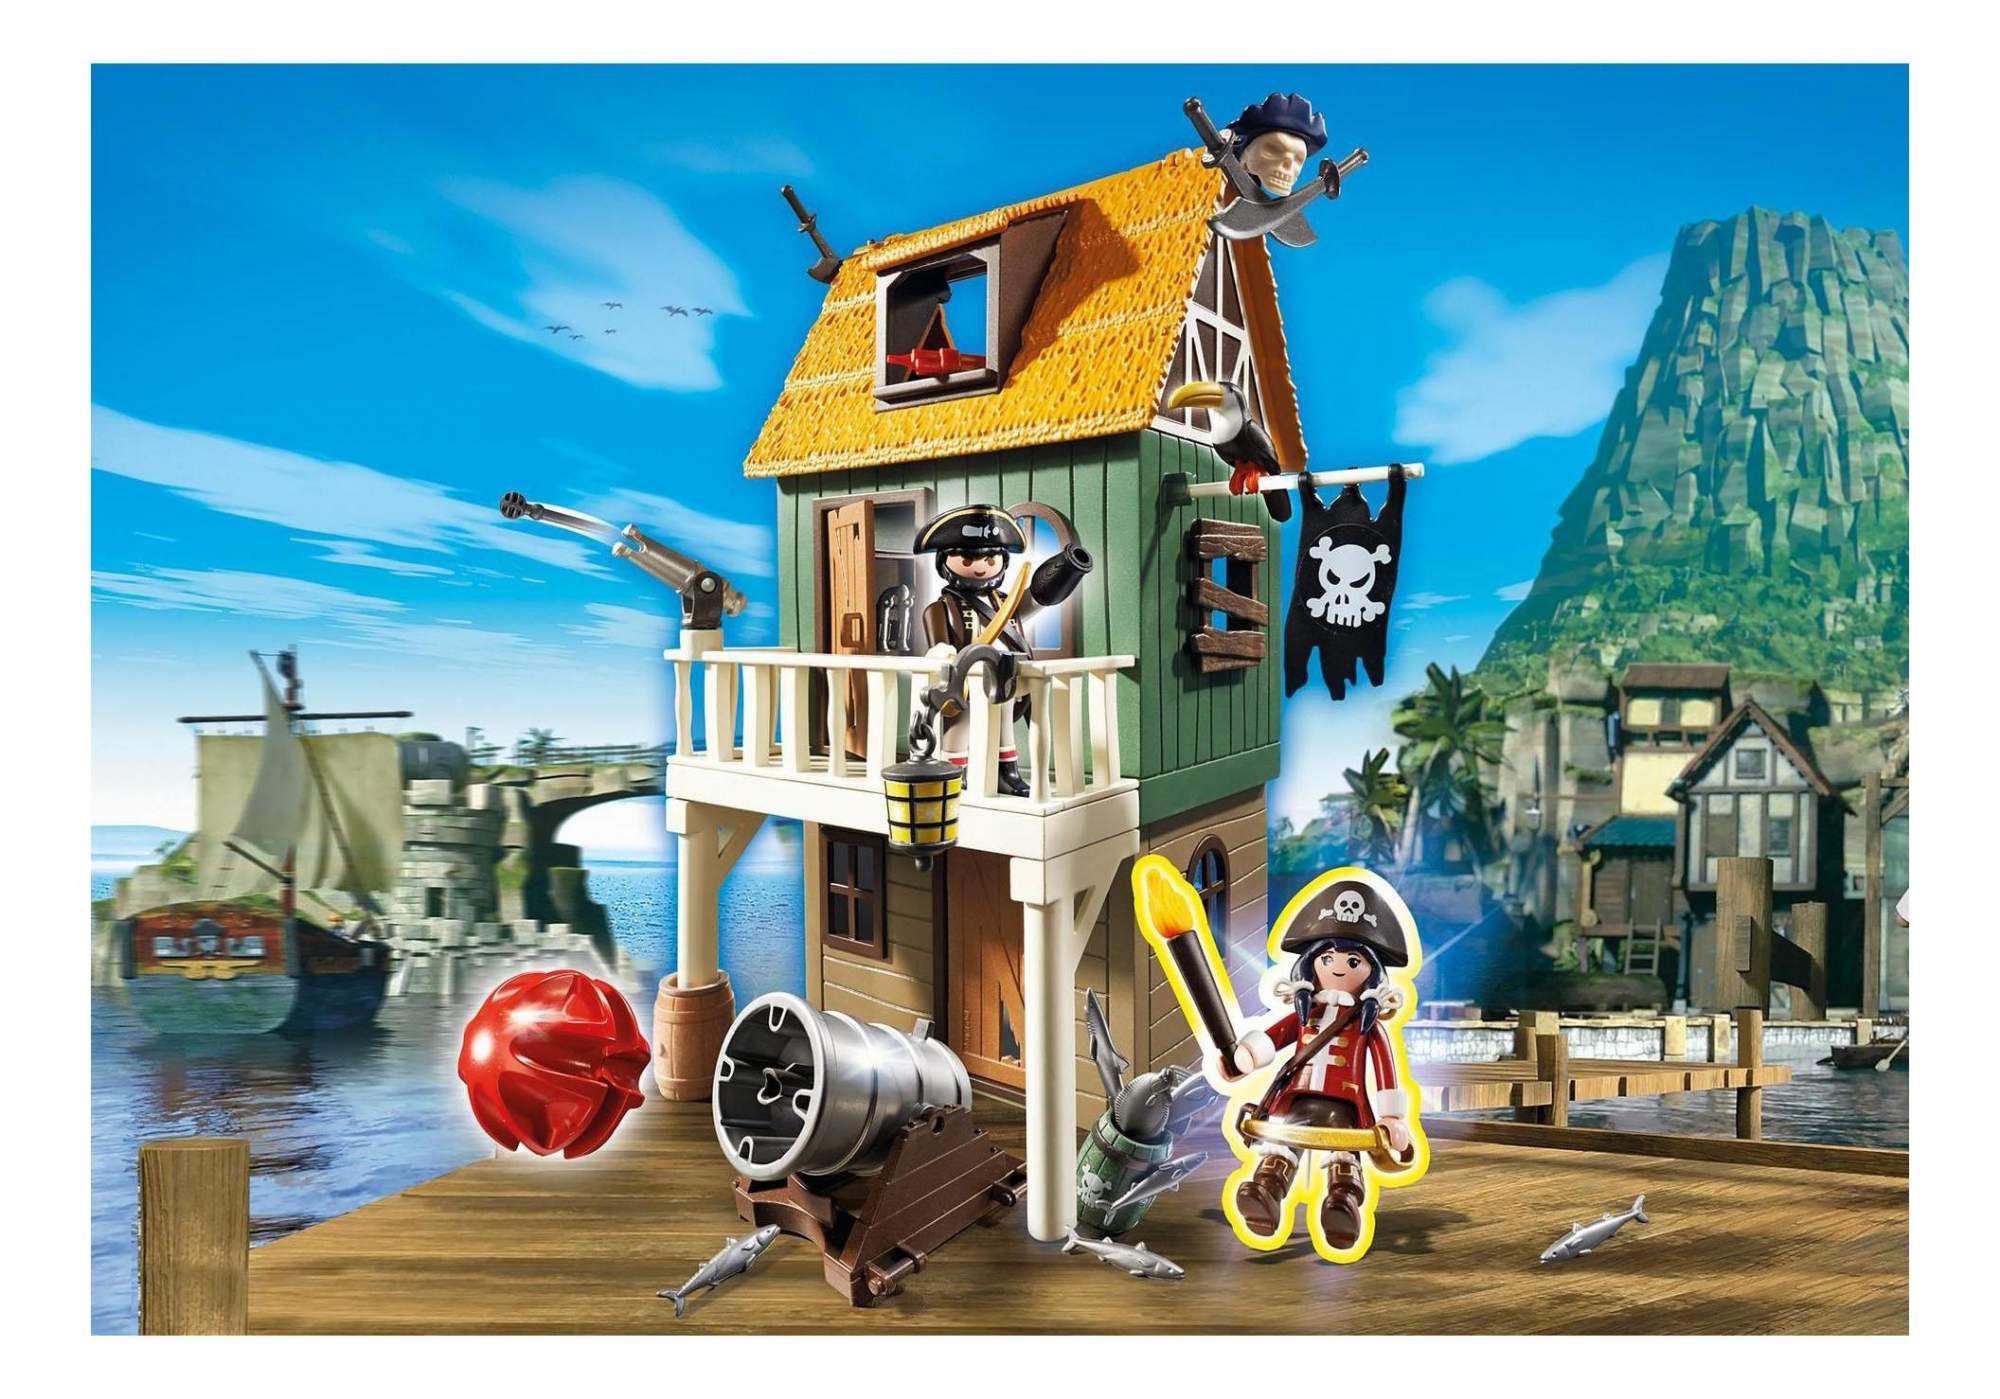 Village пиратка. Playmobil 4796. Плеймобил супер 4 пират. Плеймобиль пираты Форт. Playmobil пиратский Форт.